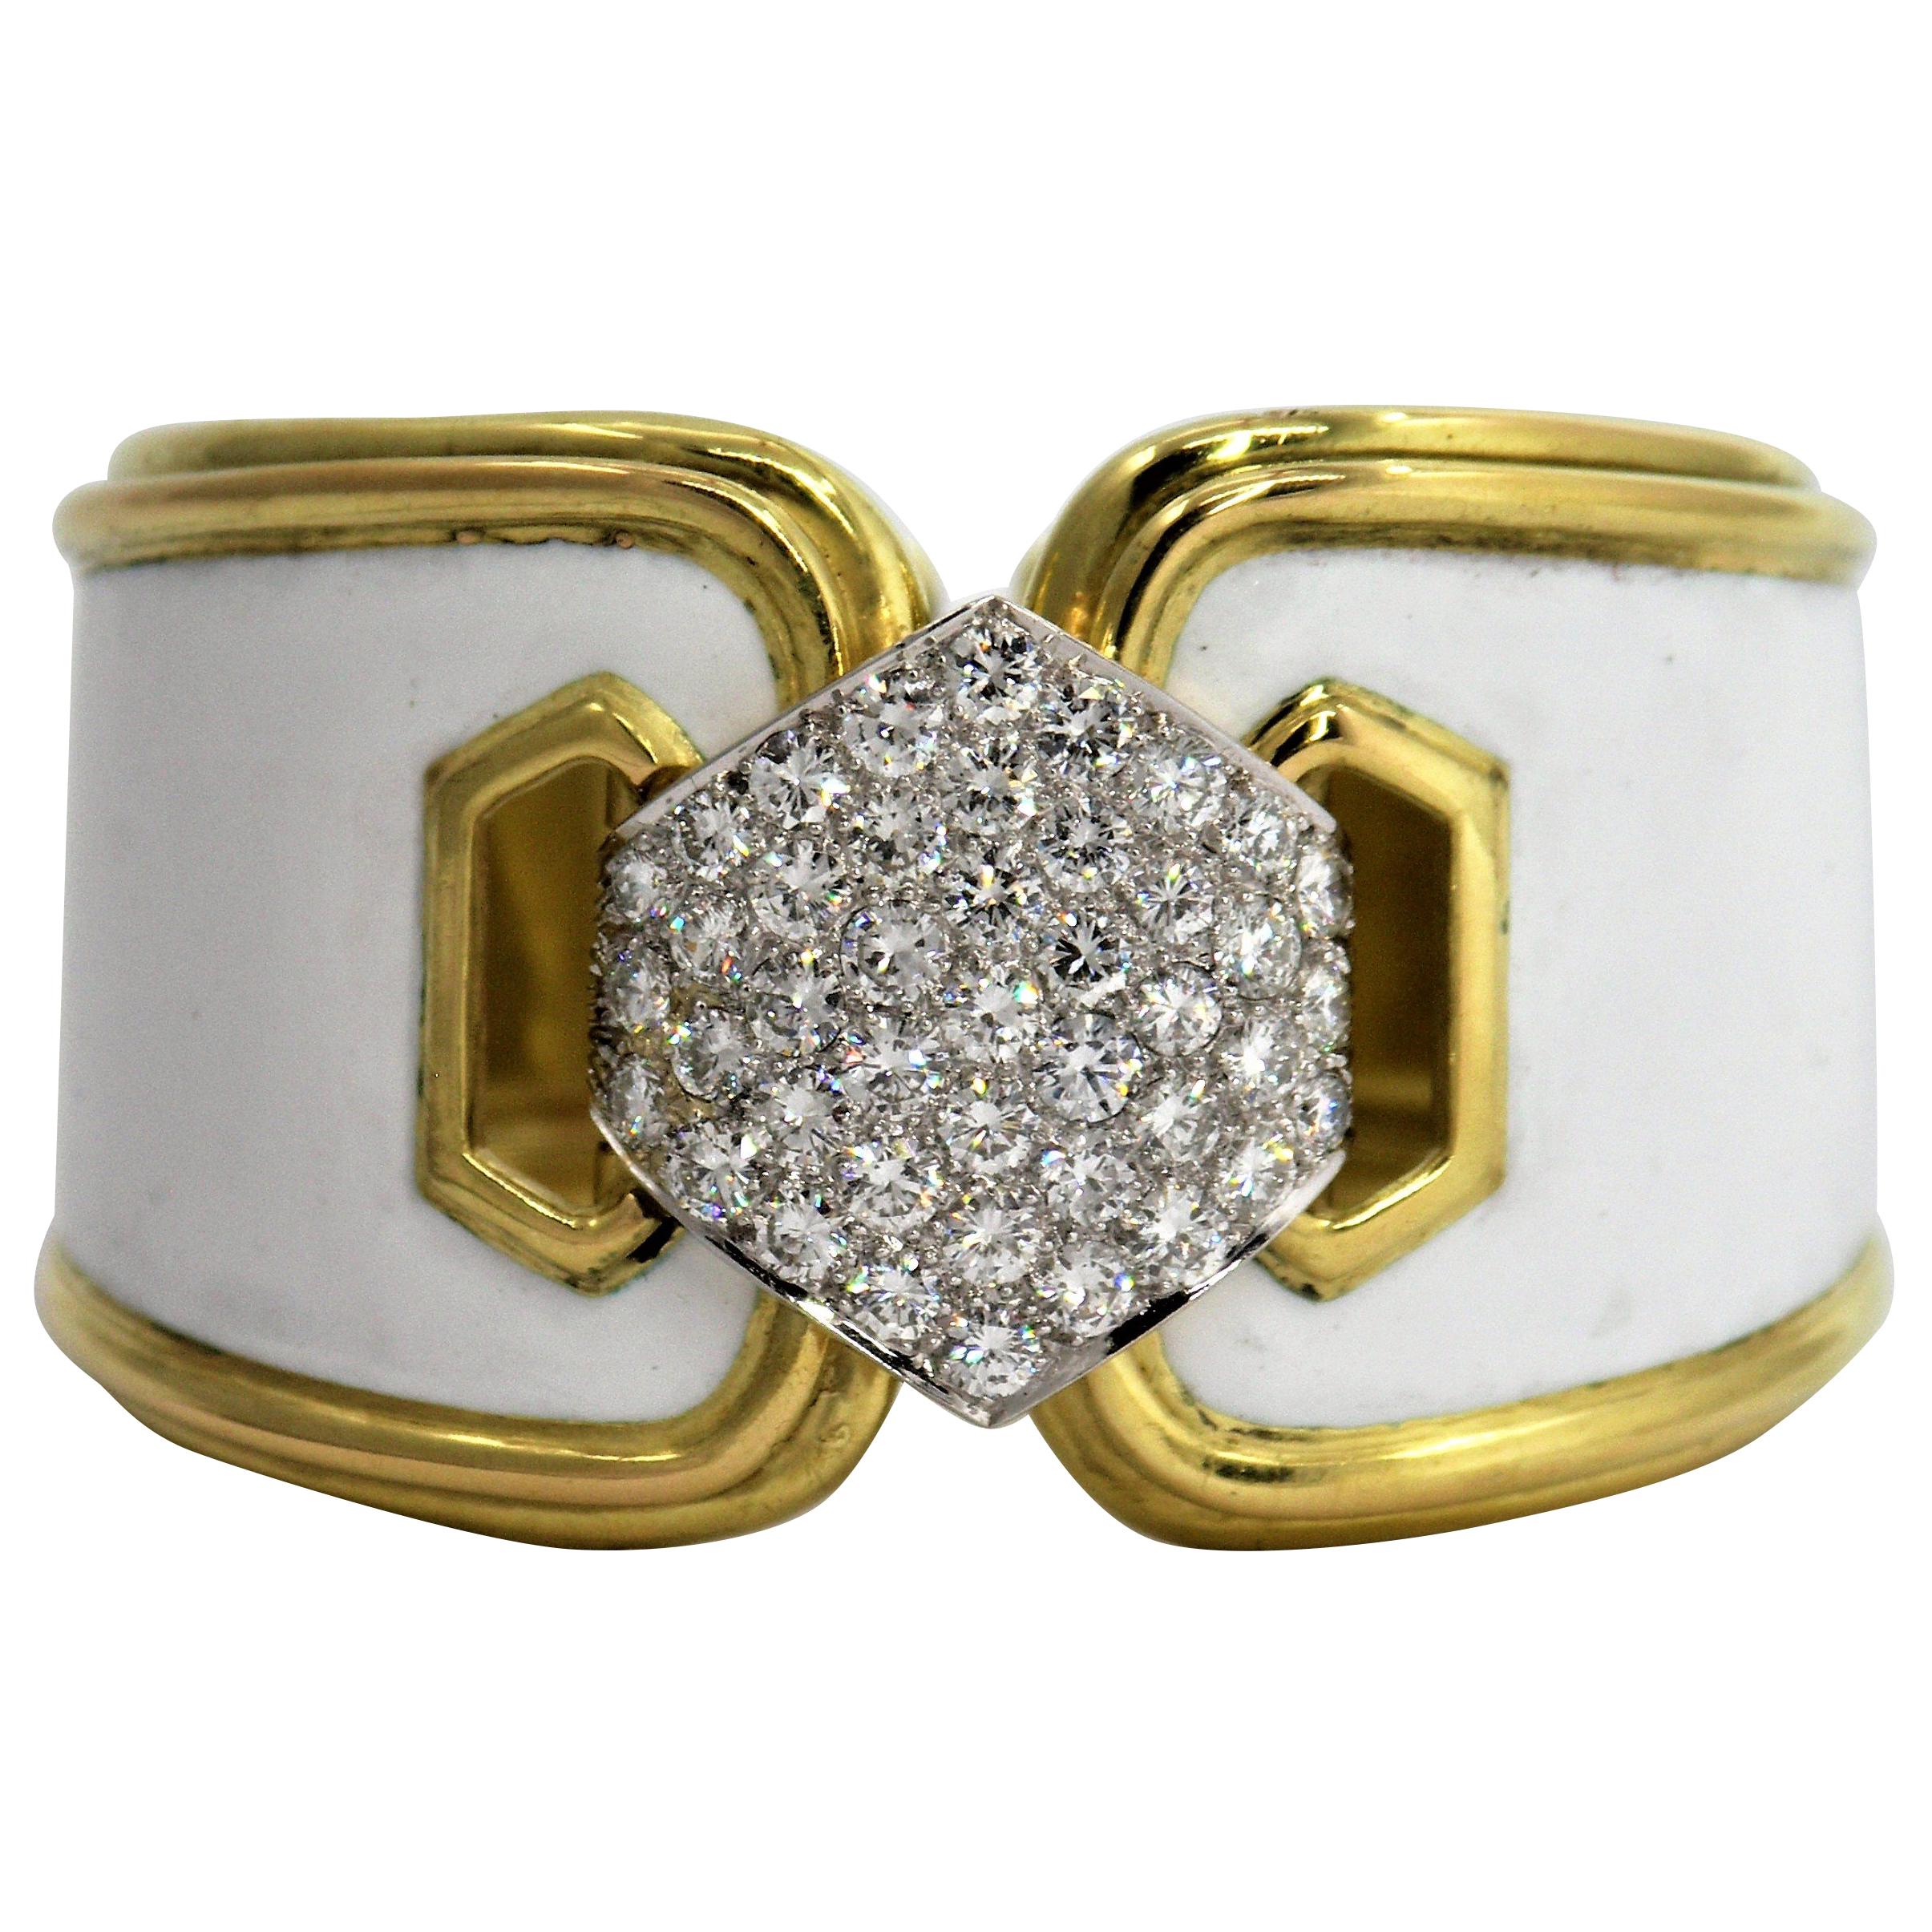 Wide David Webb White Enamel Bracelet with Pave Diamond Centrepiece